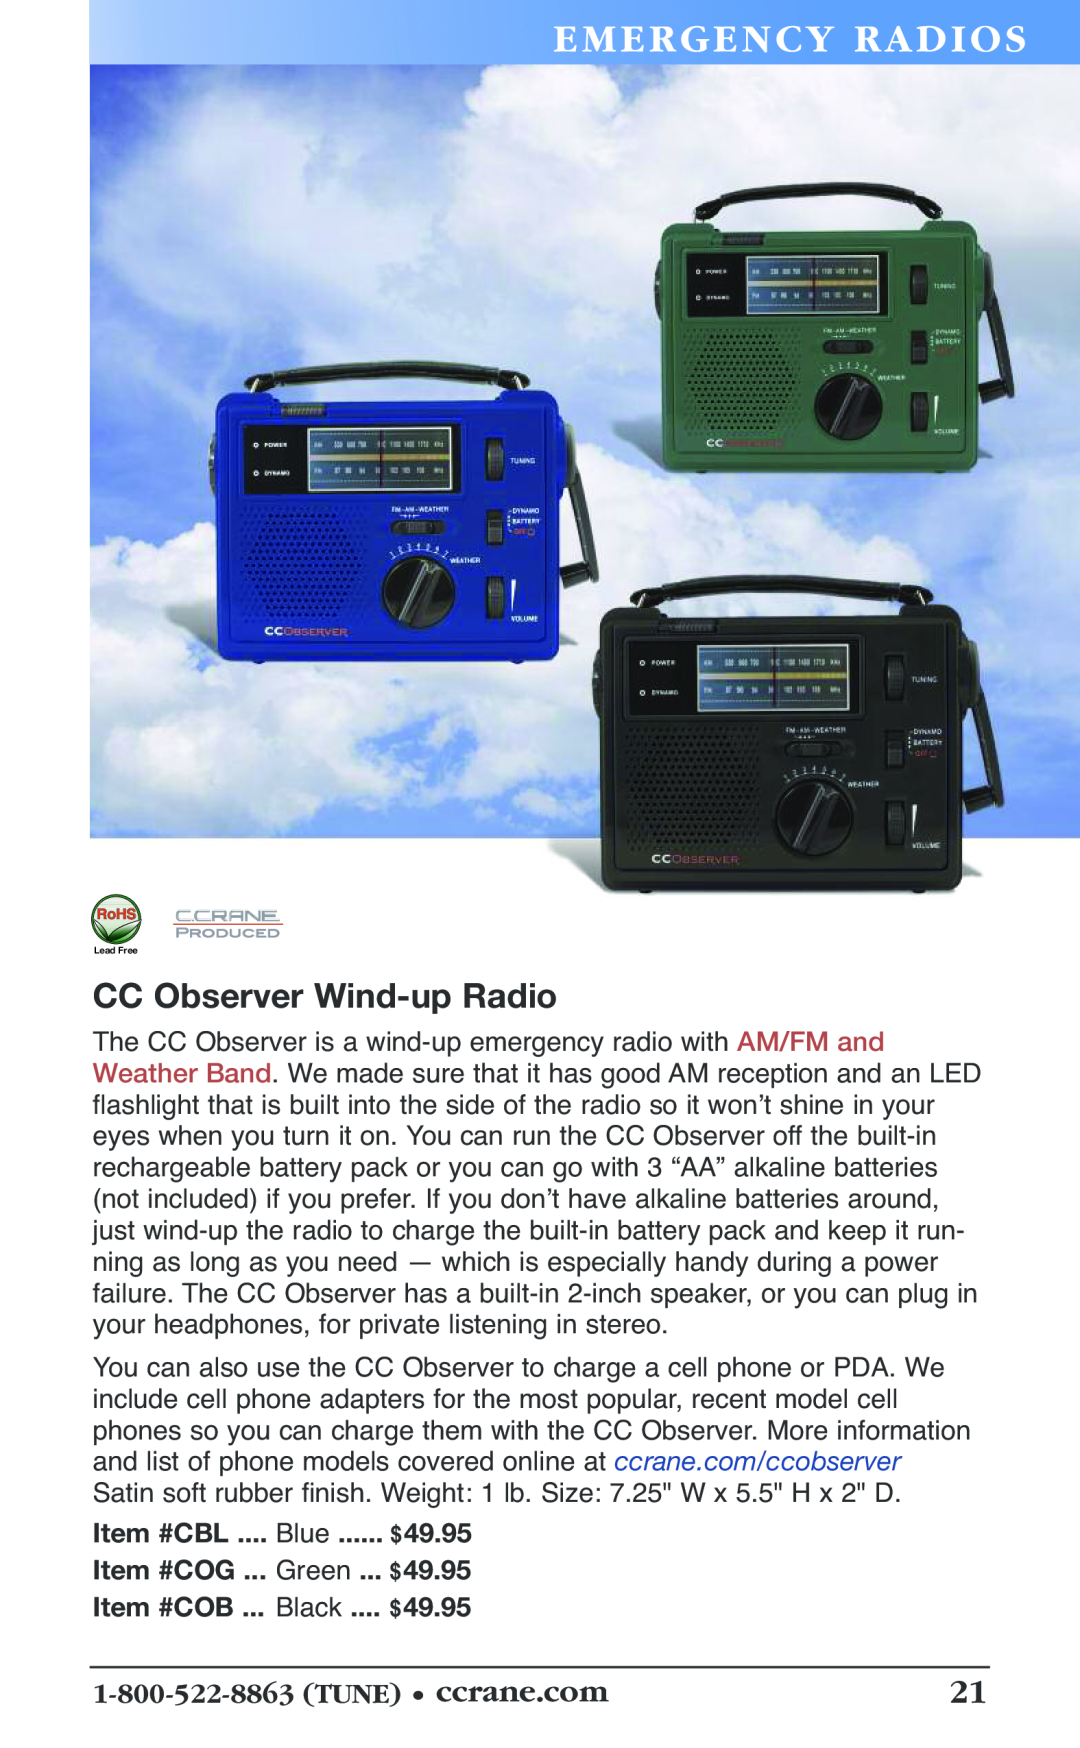 C. Crane 19f Emerg En Cy Radi Os, CC Observer Wind-upRadio, Item #CBL .... Green...... $49.95, Item #COB ... .... $49.95 